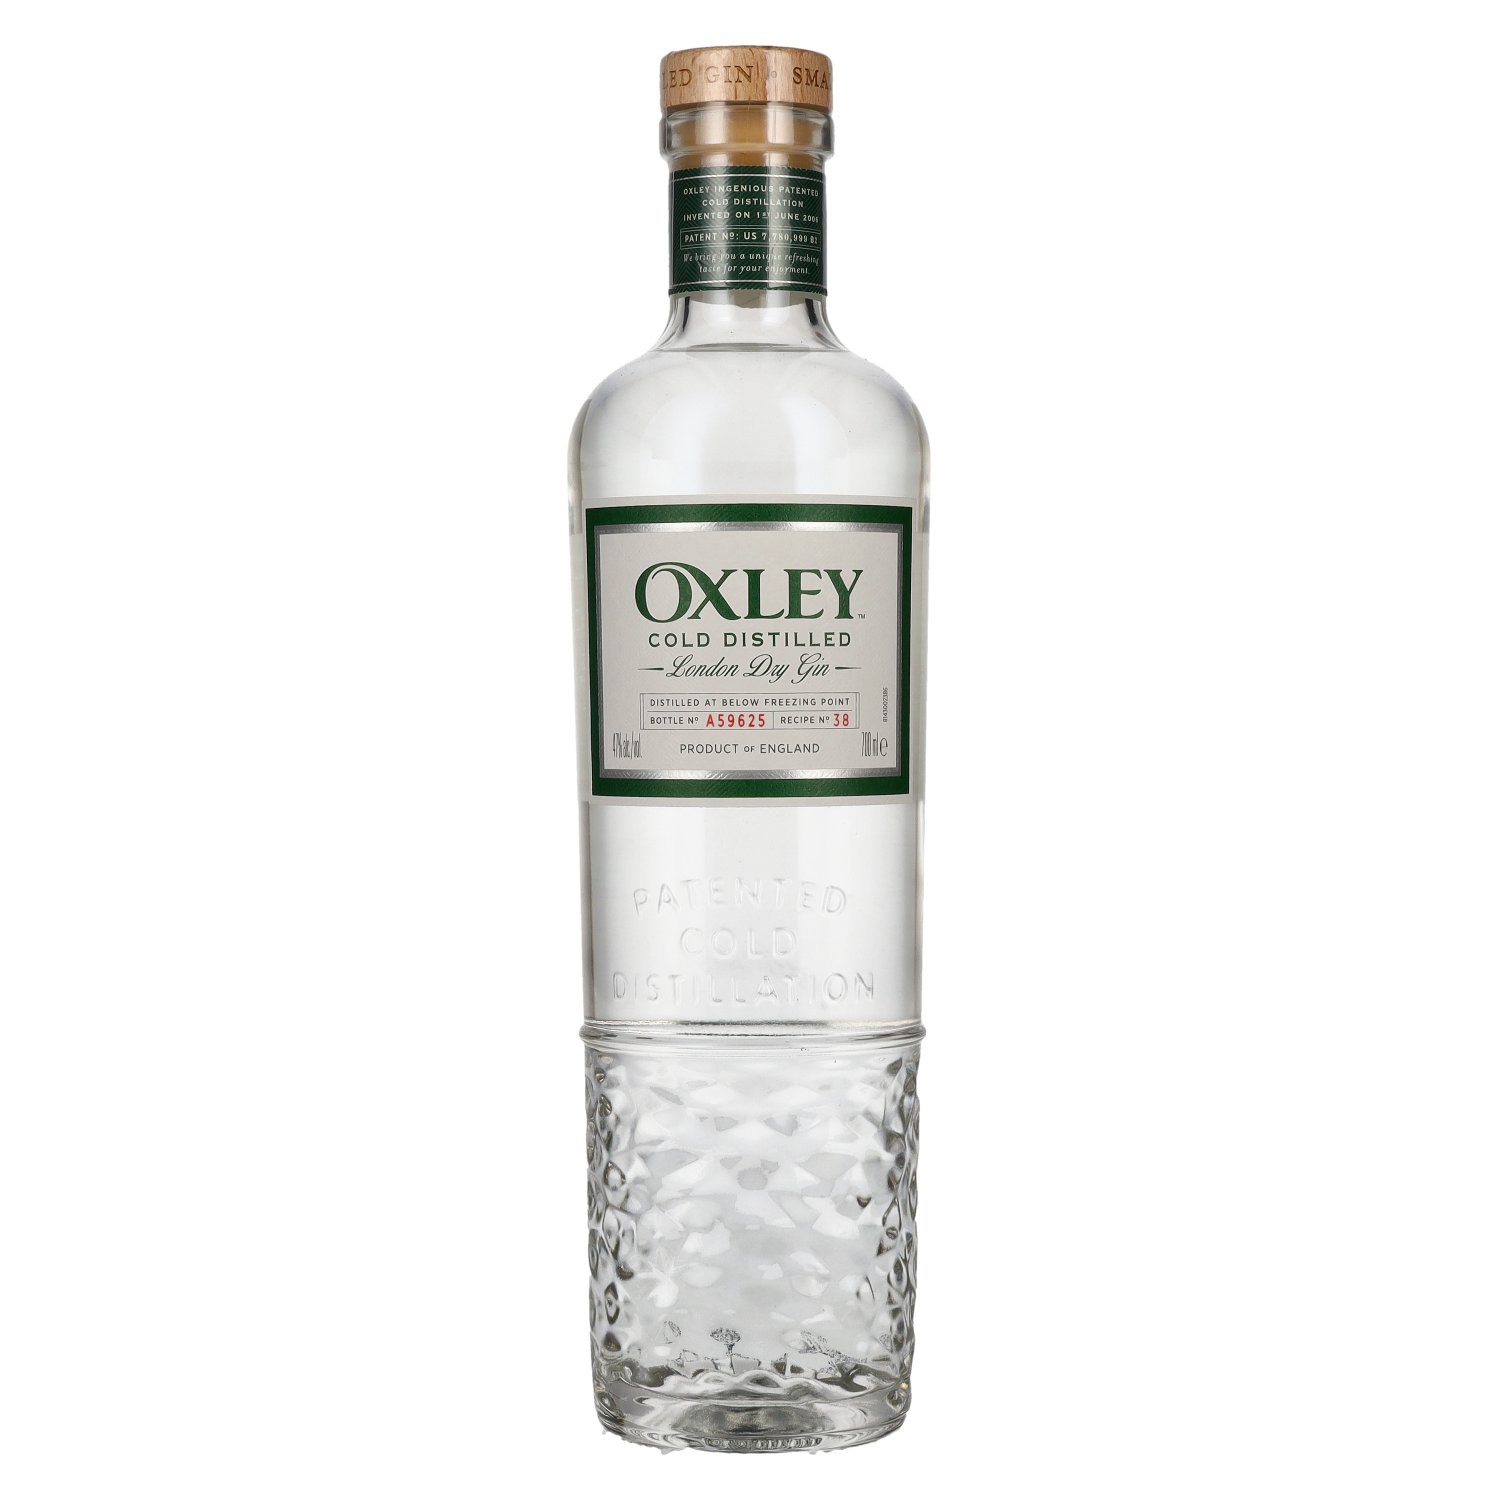 Oxley London Dry Gin 47% 0,7 l (čistá fľaša)